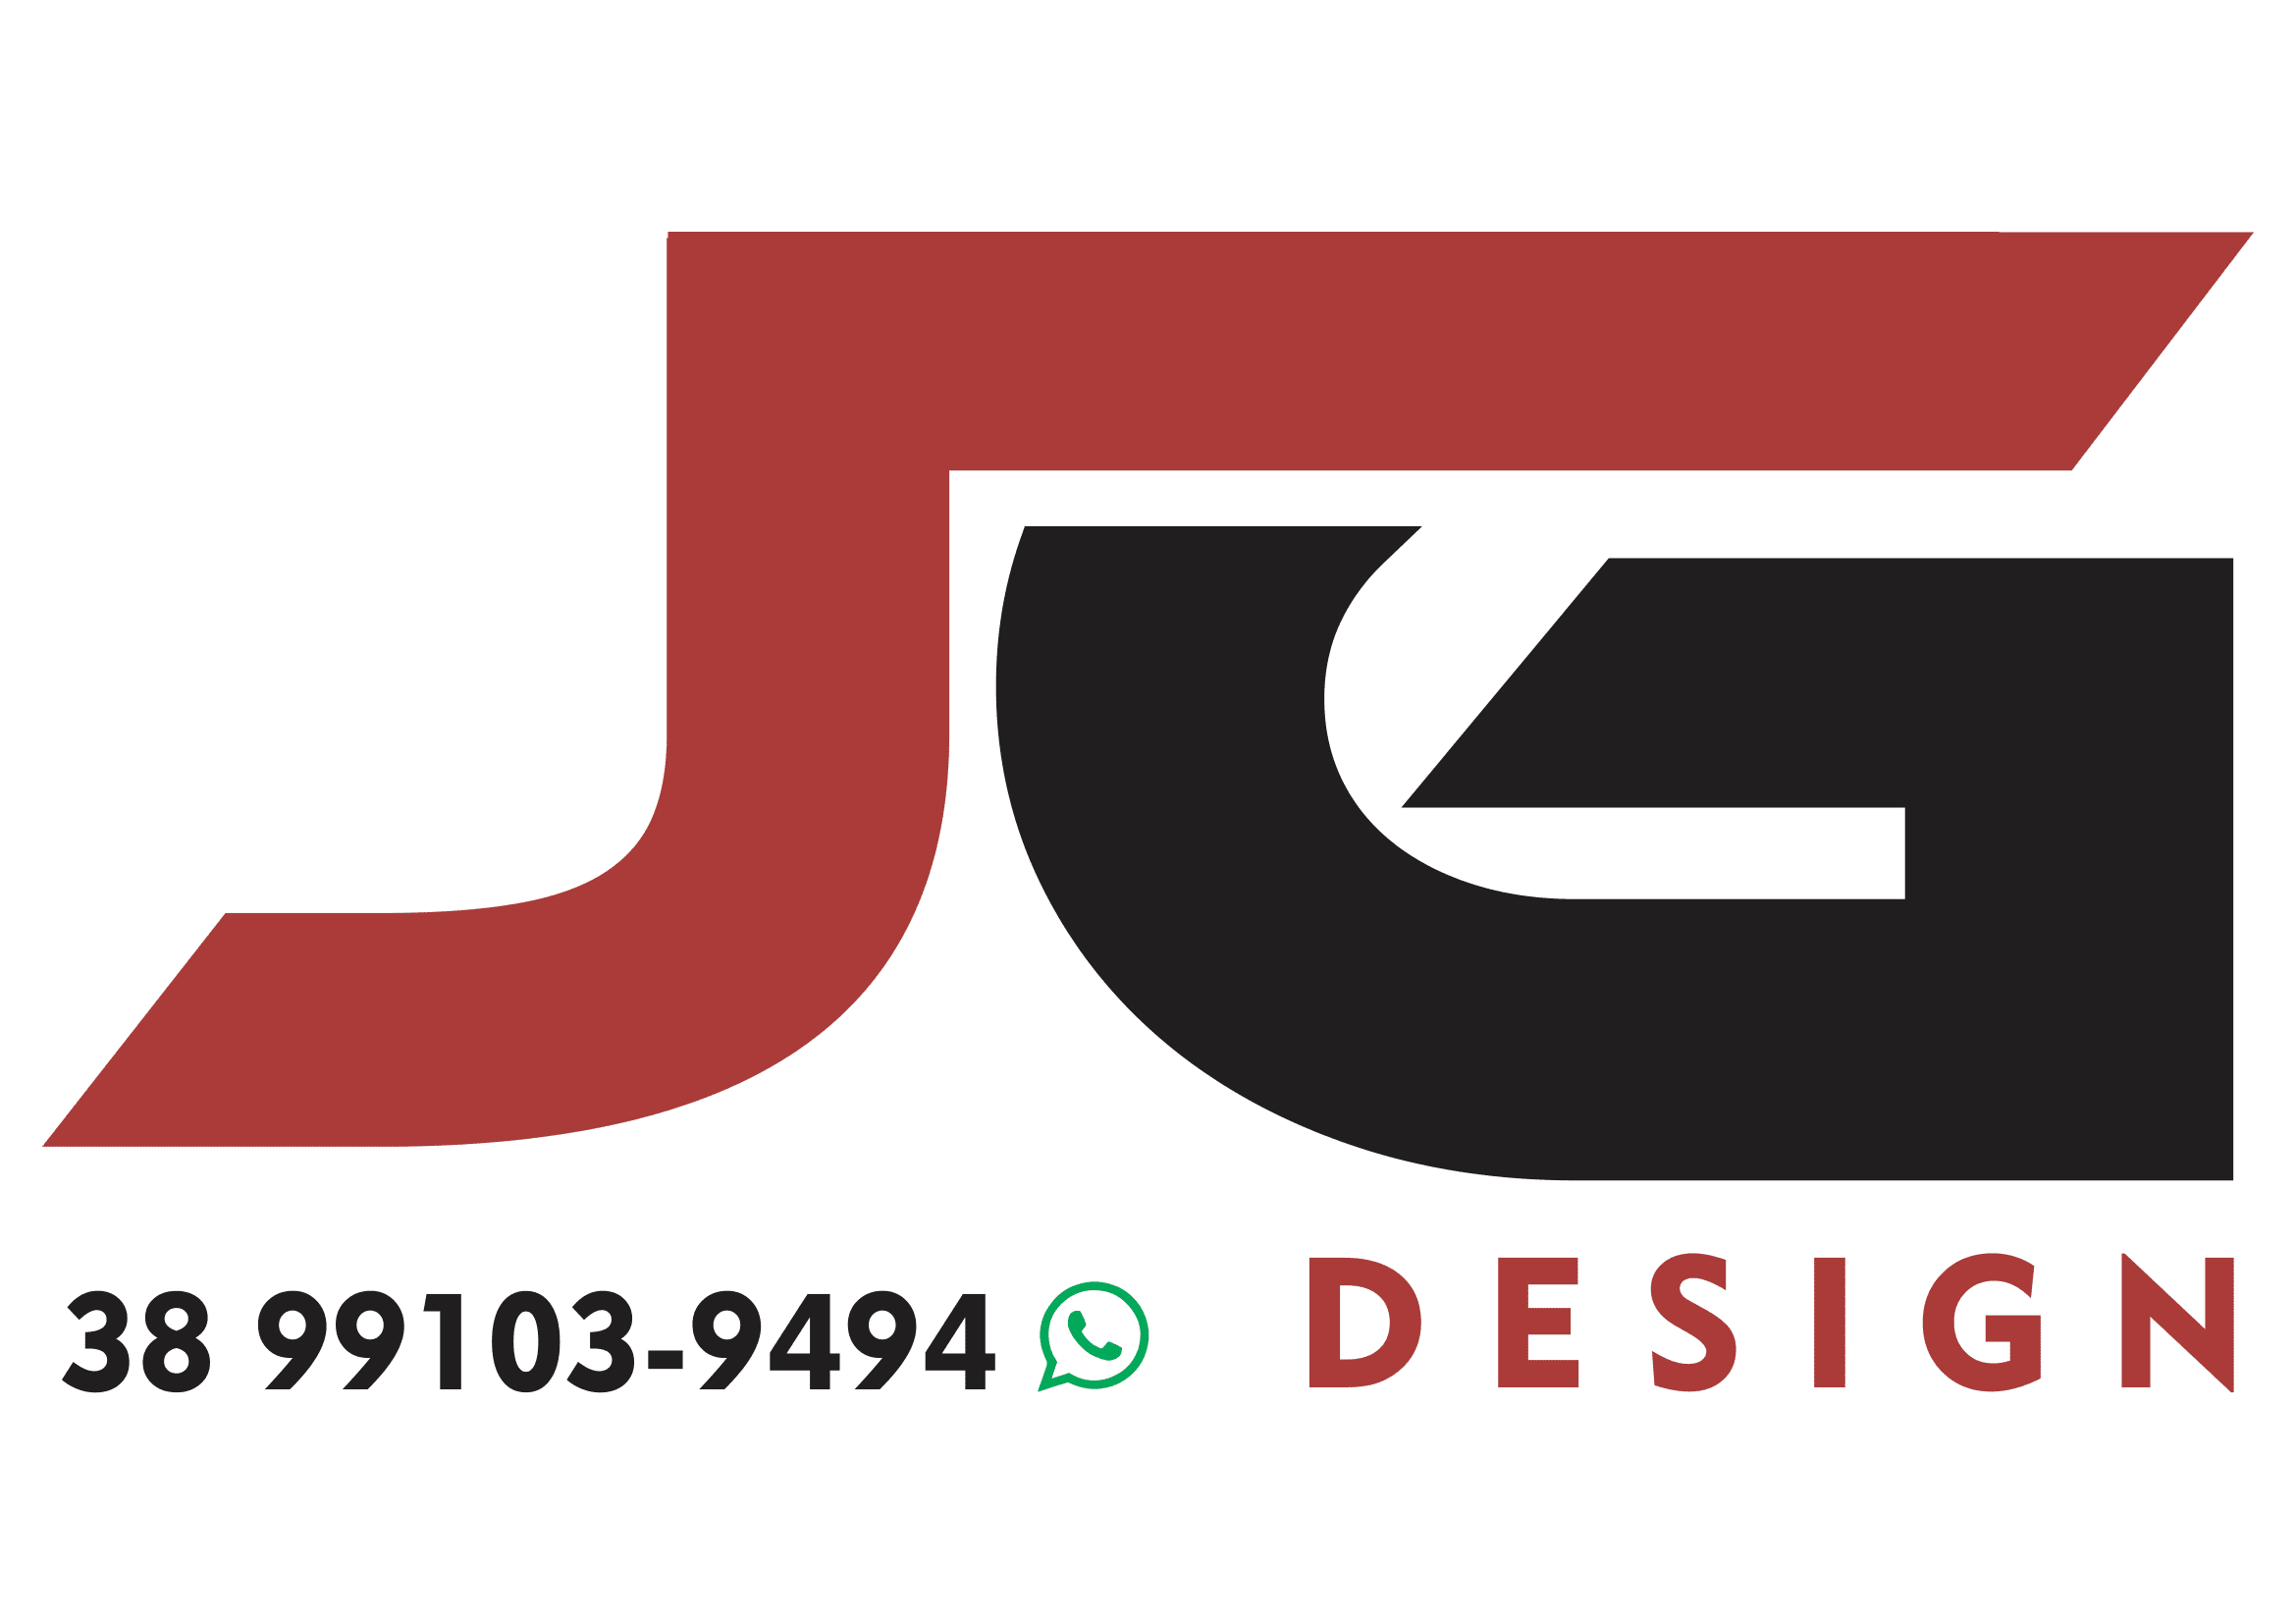 JG Design